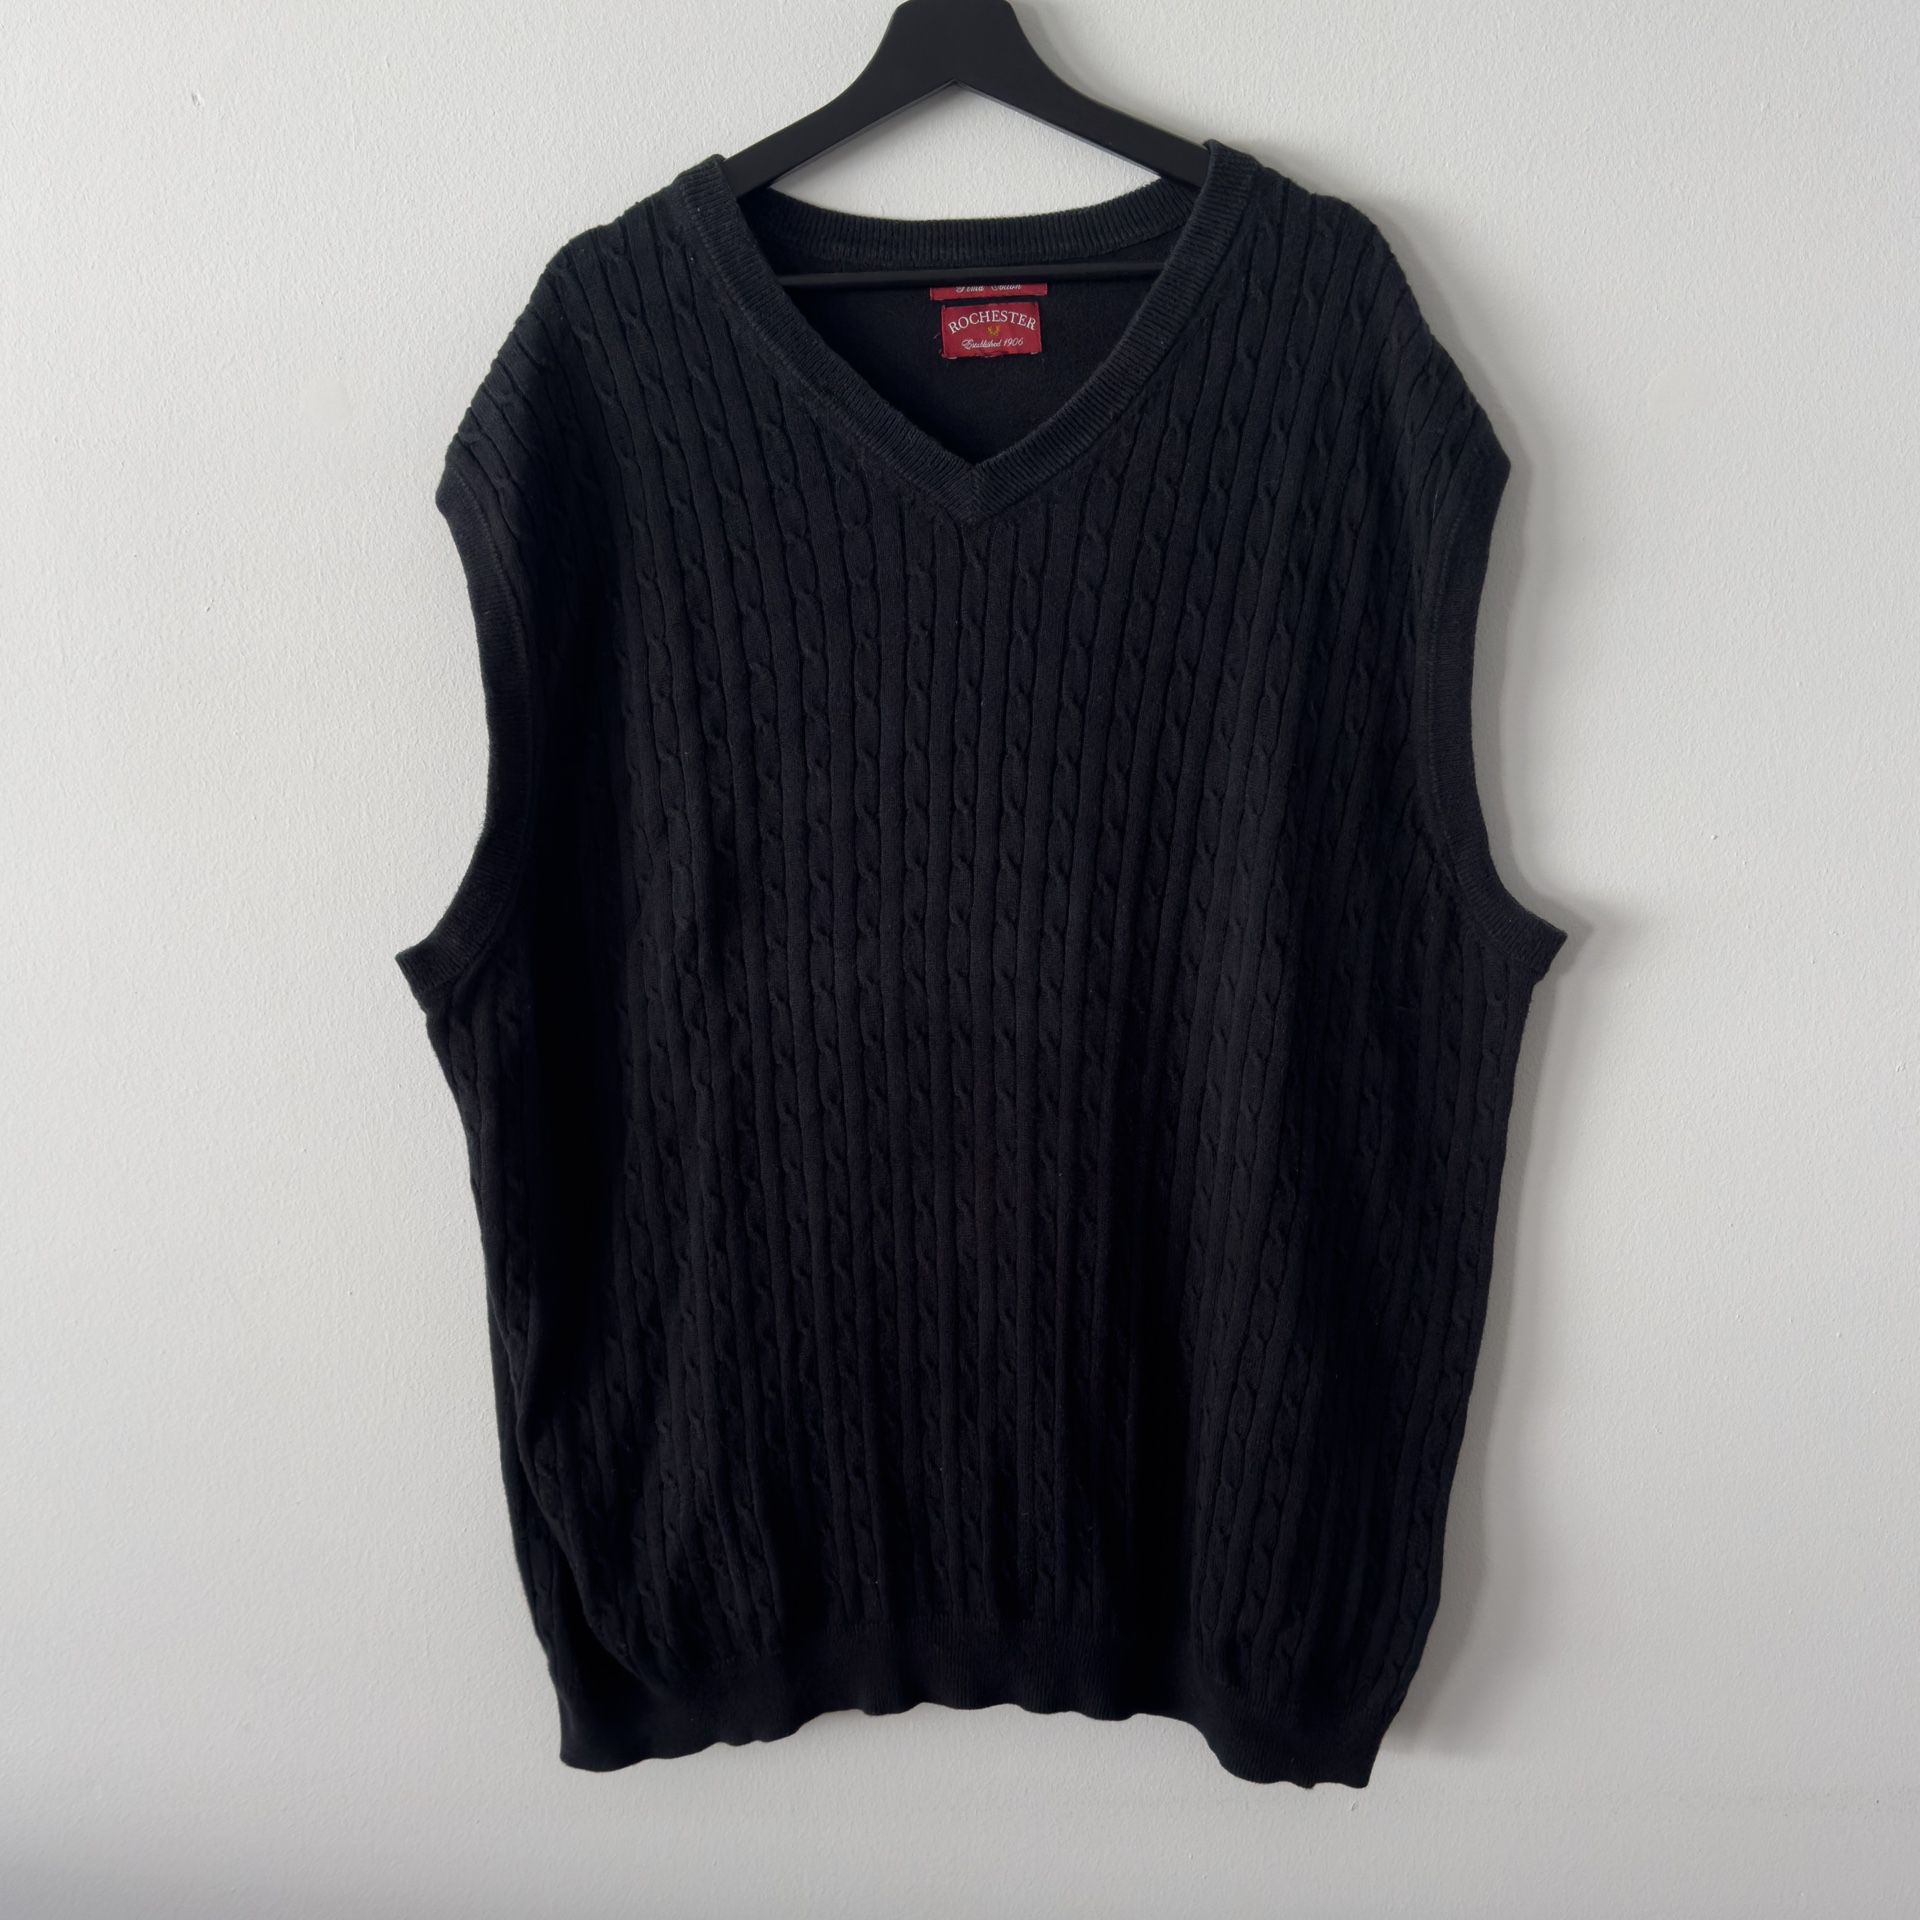 Rochester Black Knit Sweater Vest No Size Tag 100% Cotton